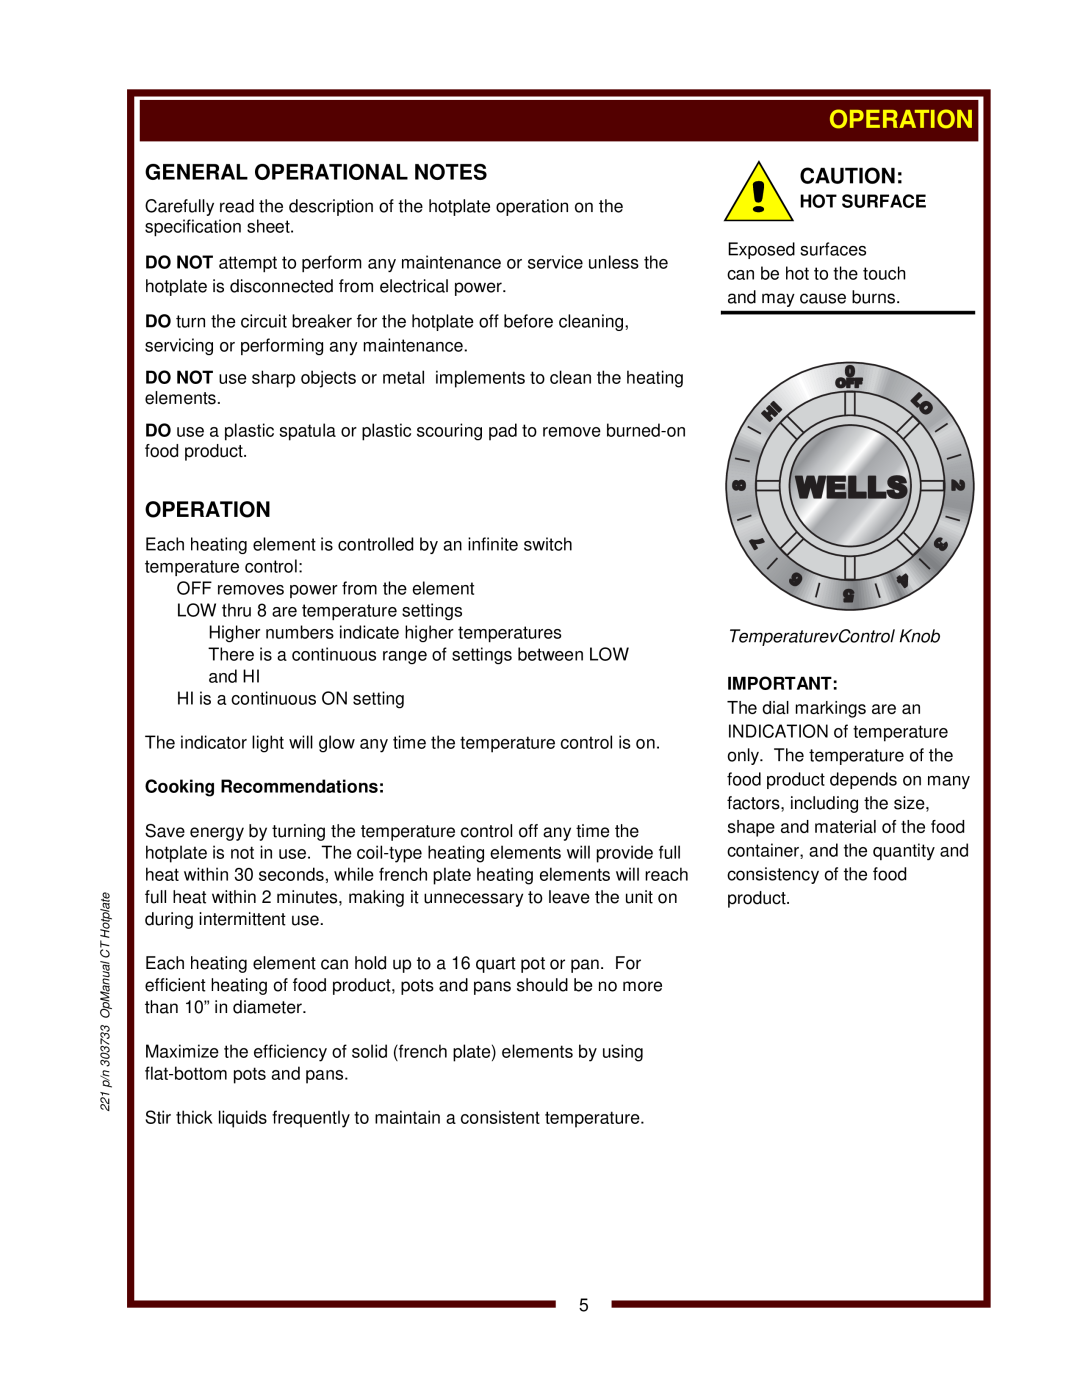 Wells H-65, H-33, H-70, H-63, H-115 operation manual 0 OFF, 221 p/n 303733 OpManual CT Hotplate 